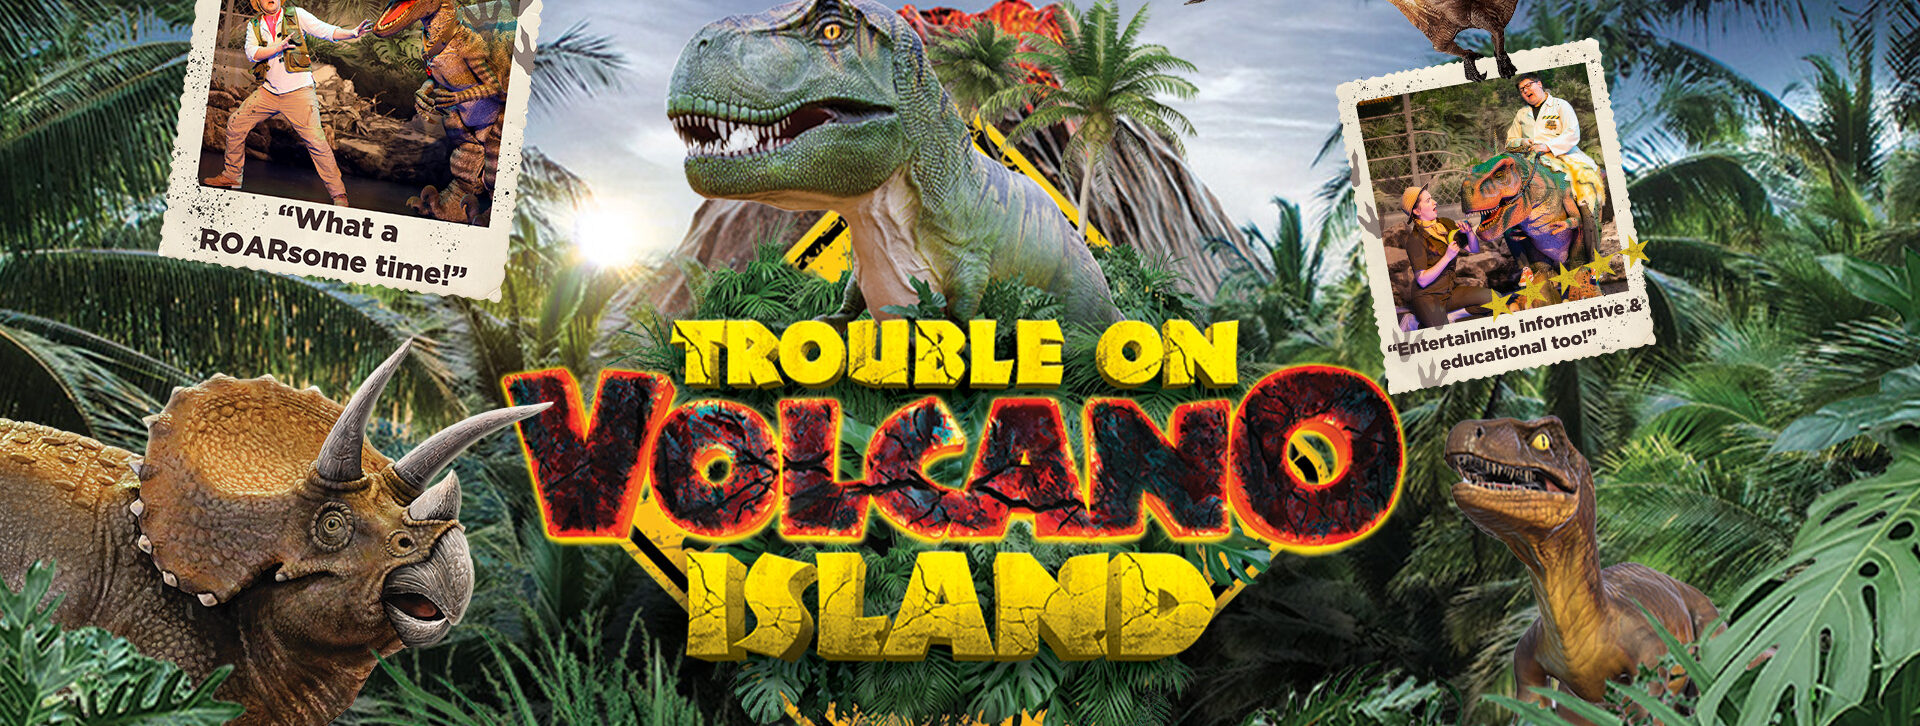 Dinosaur Adventure Live: Trouble on Volcano Island